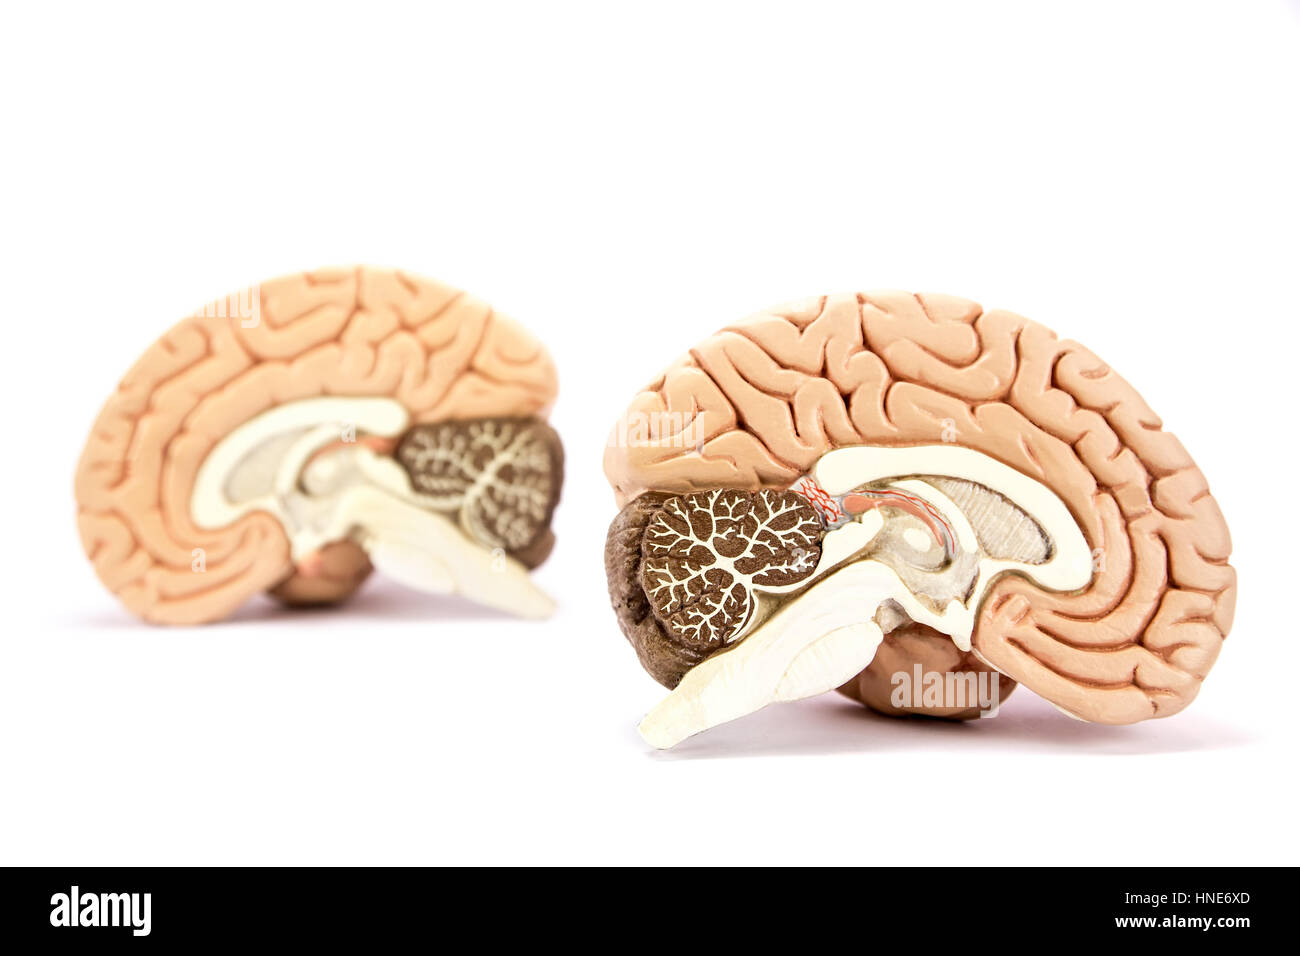 Two human brain hemispheres models isolated on white background Stock Photo